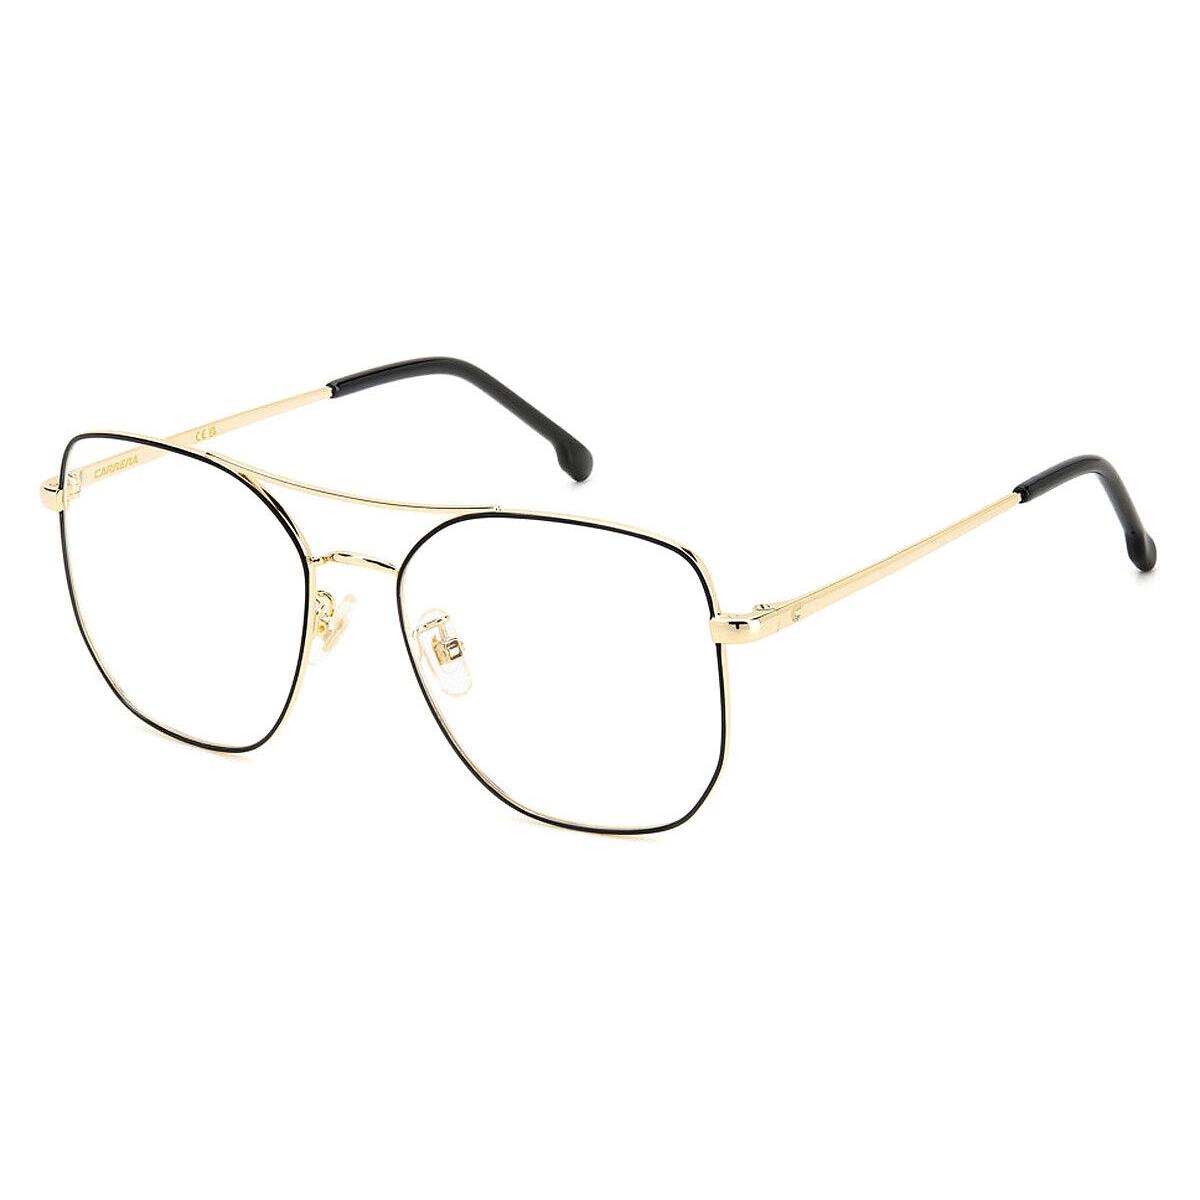 Carrera Car Eyeglasses Women Black Gold 53mm